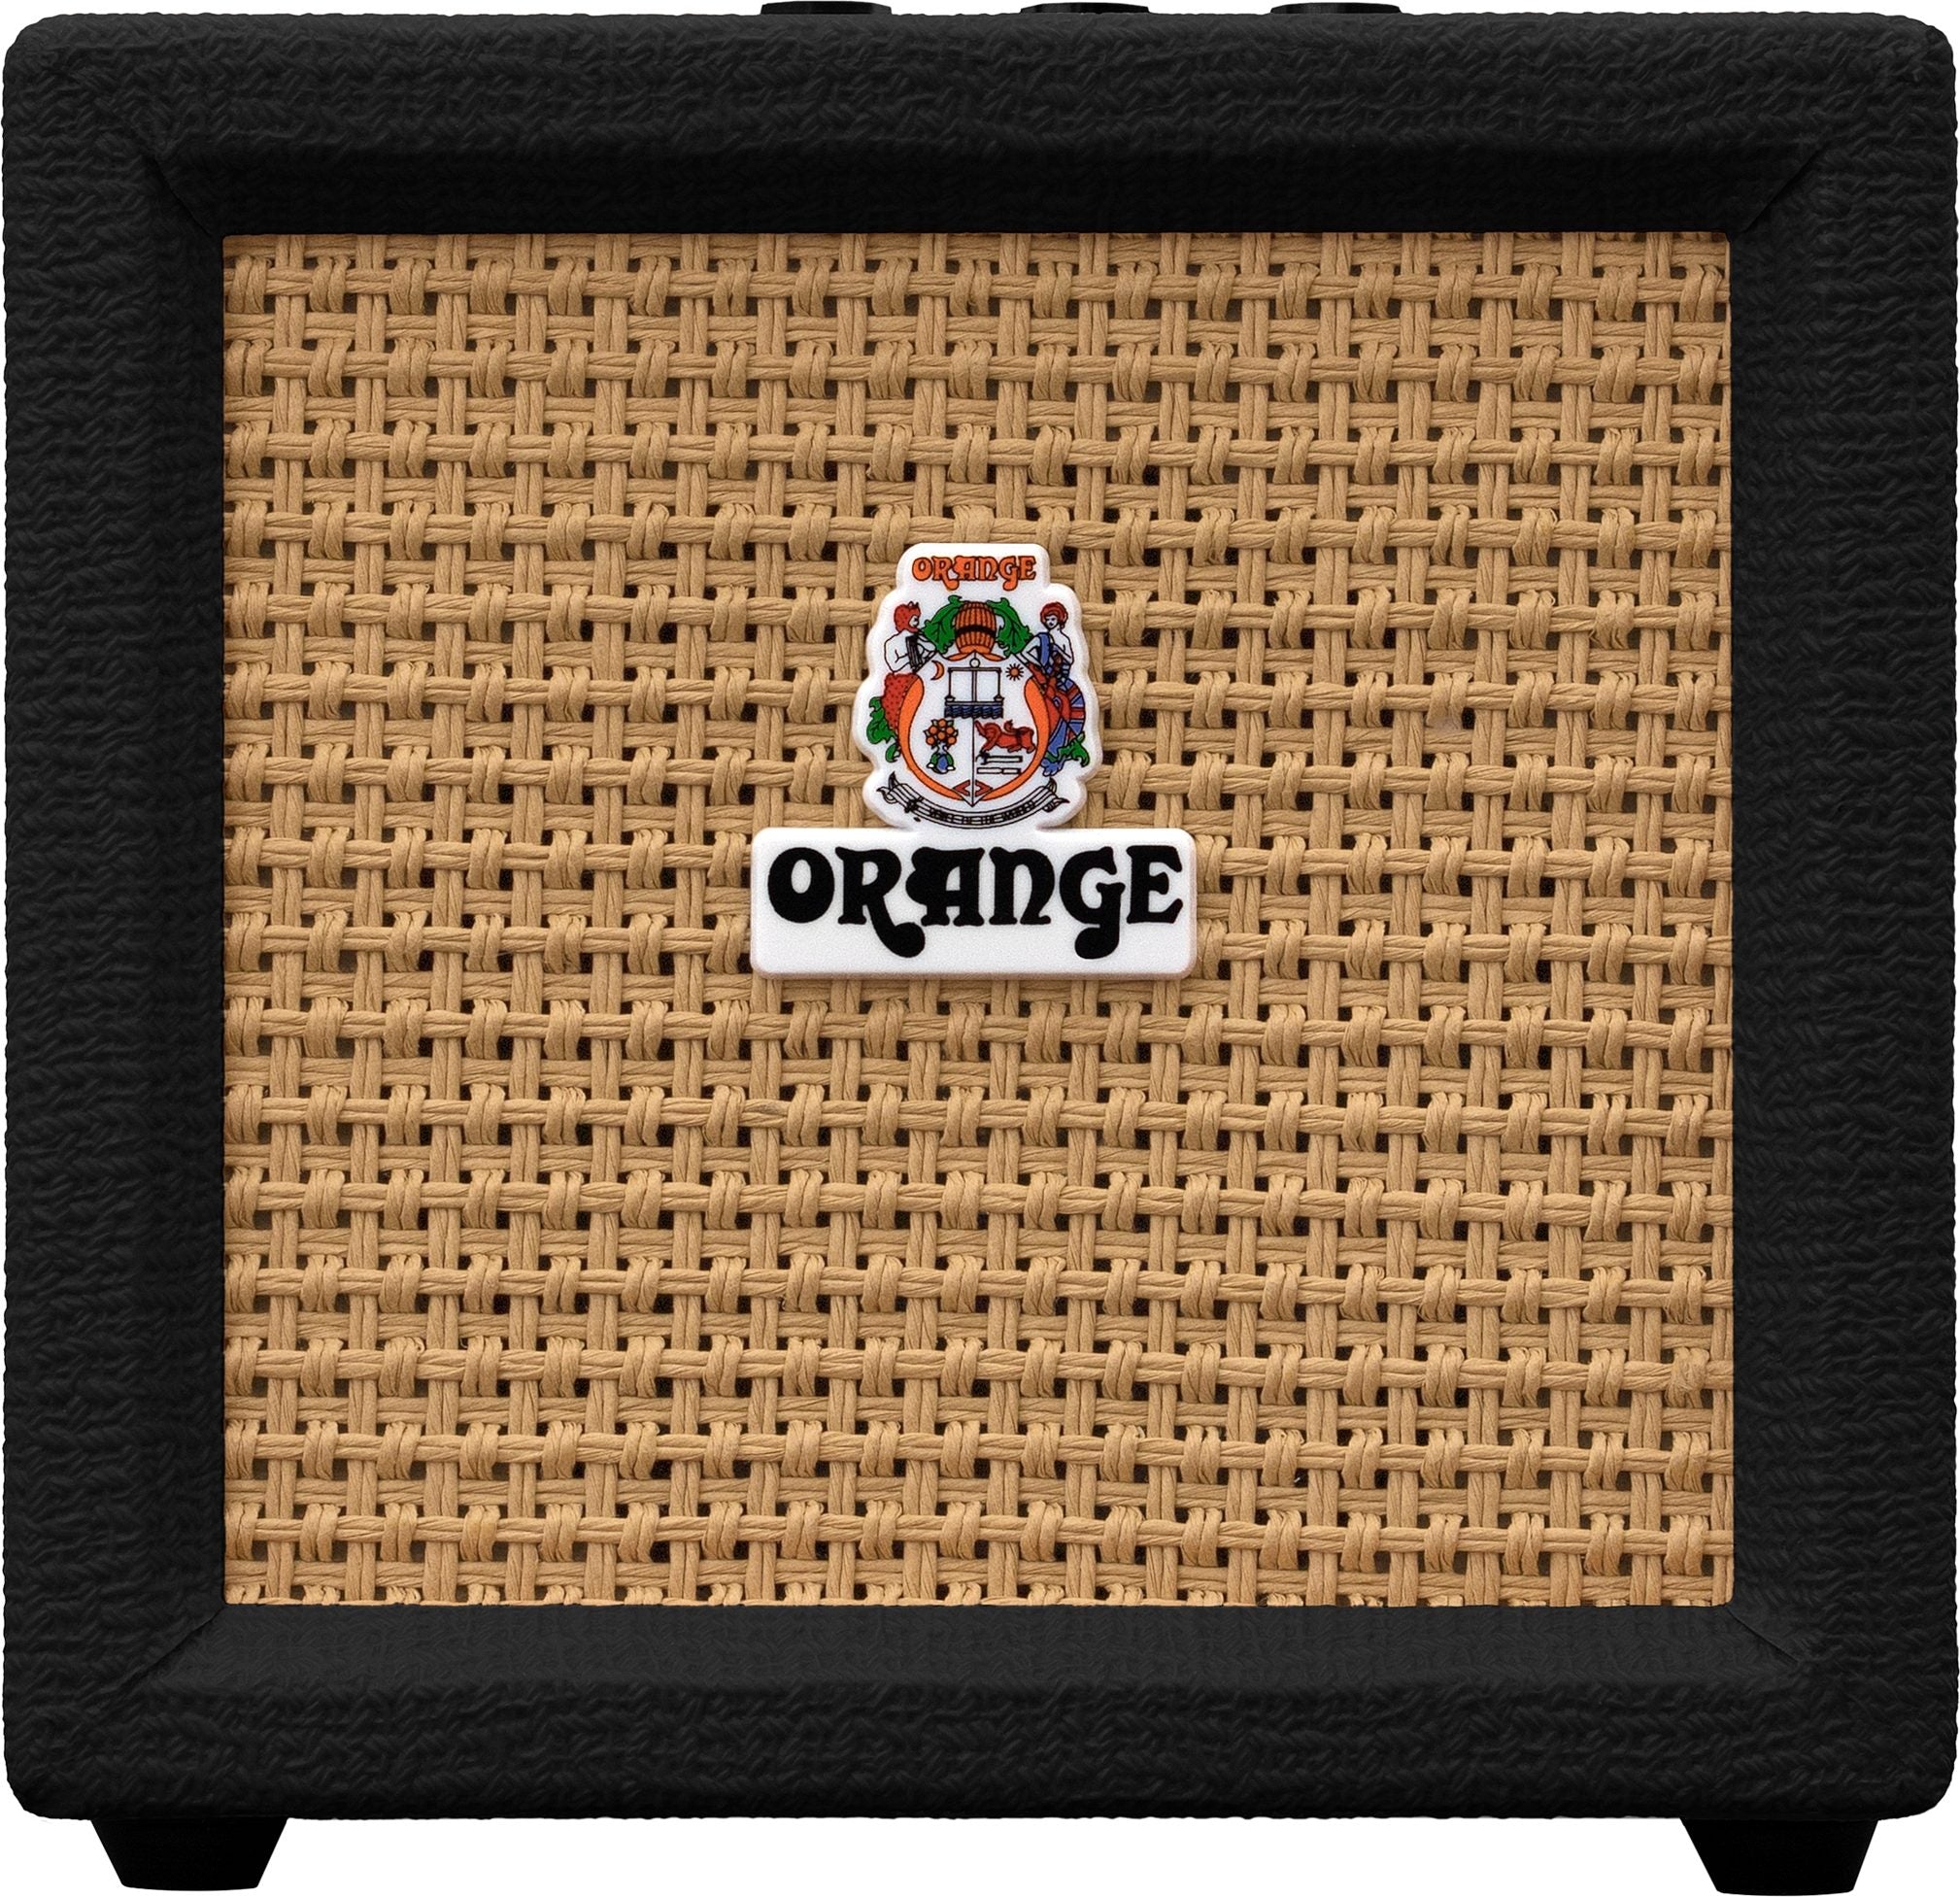 ORANGE CRUSH MINI 3 WATT AMP BLACK, ORANGE, GUITAR AMPLIFIER, orange-crush-mini-3-watt-amp-black, ZOSO MUSIC SDN BHD